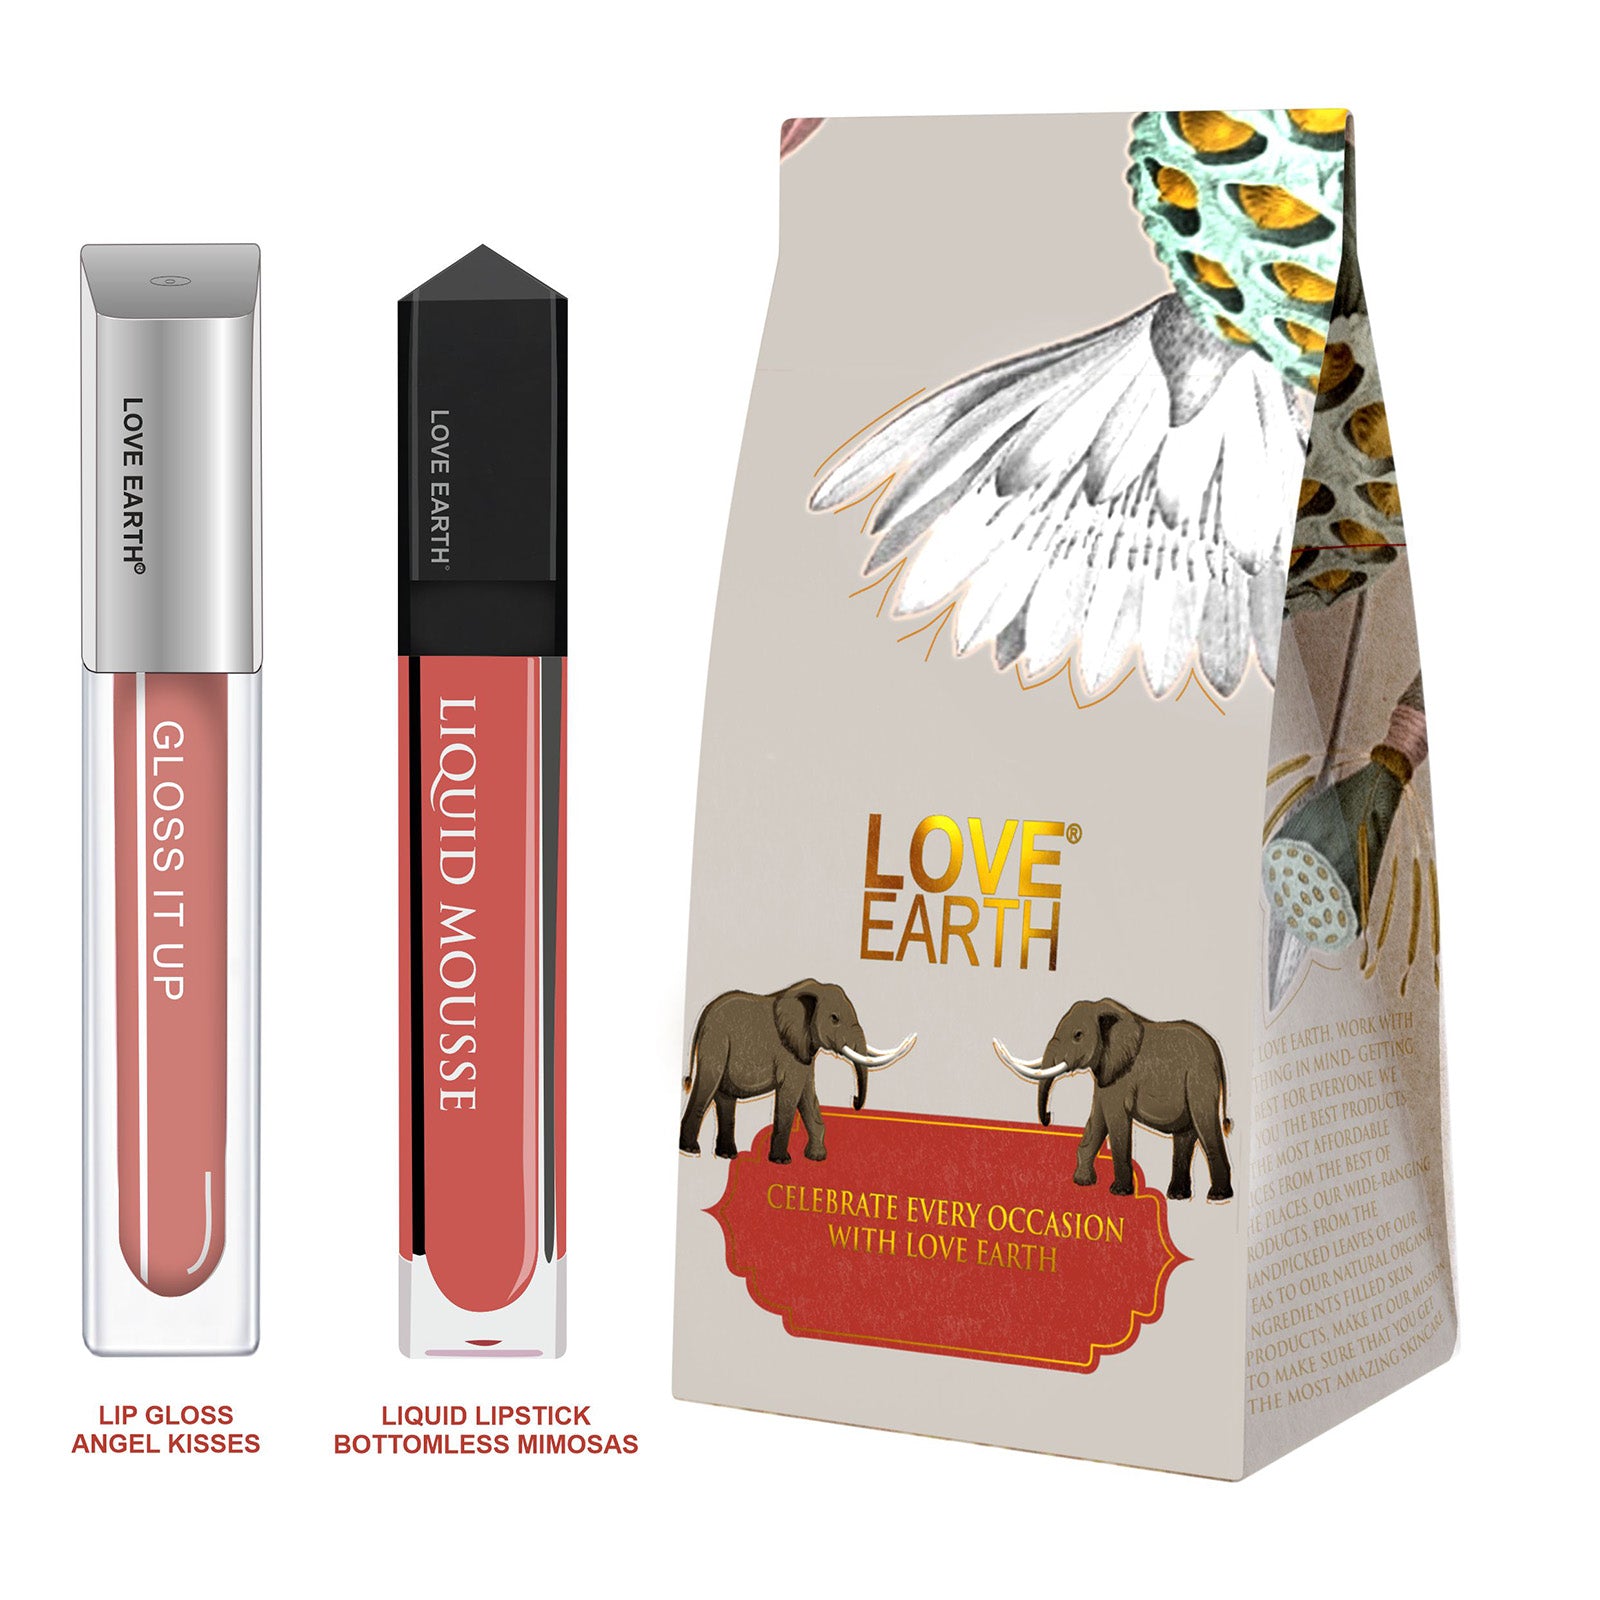 Lip Gloss Angel Kisses & Liquid Lipstick Bottomless Mimosas Gift Pack